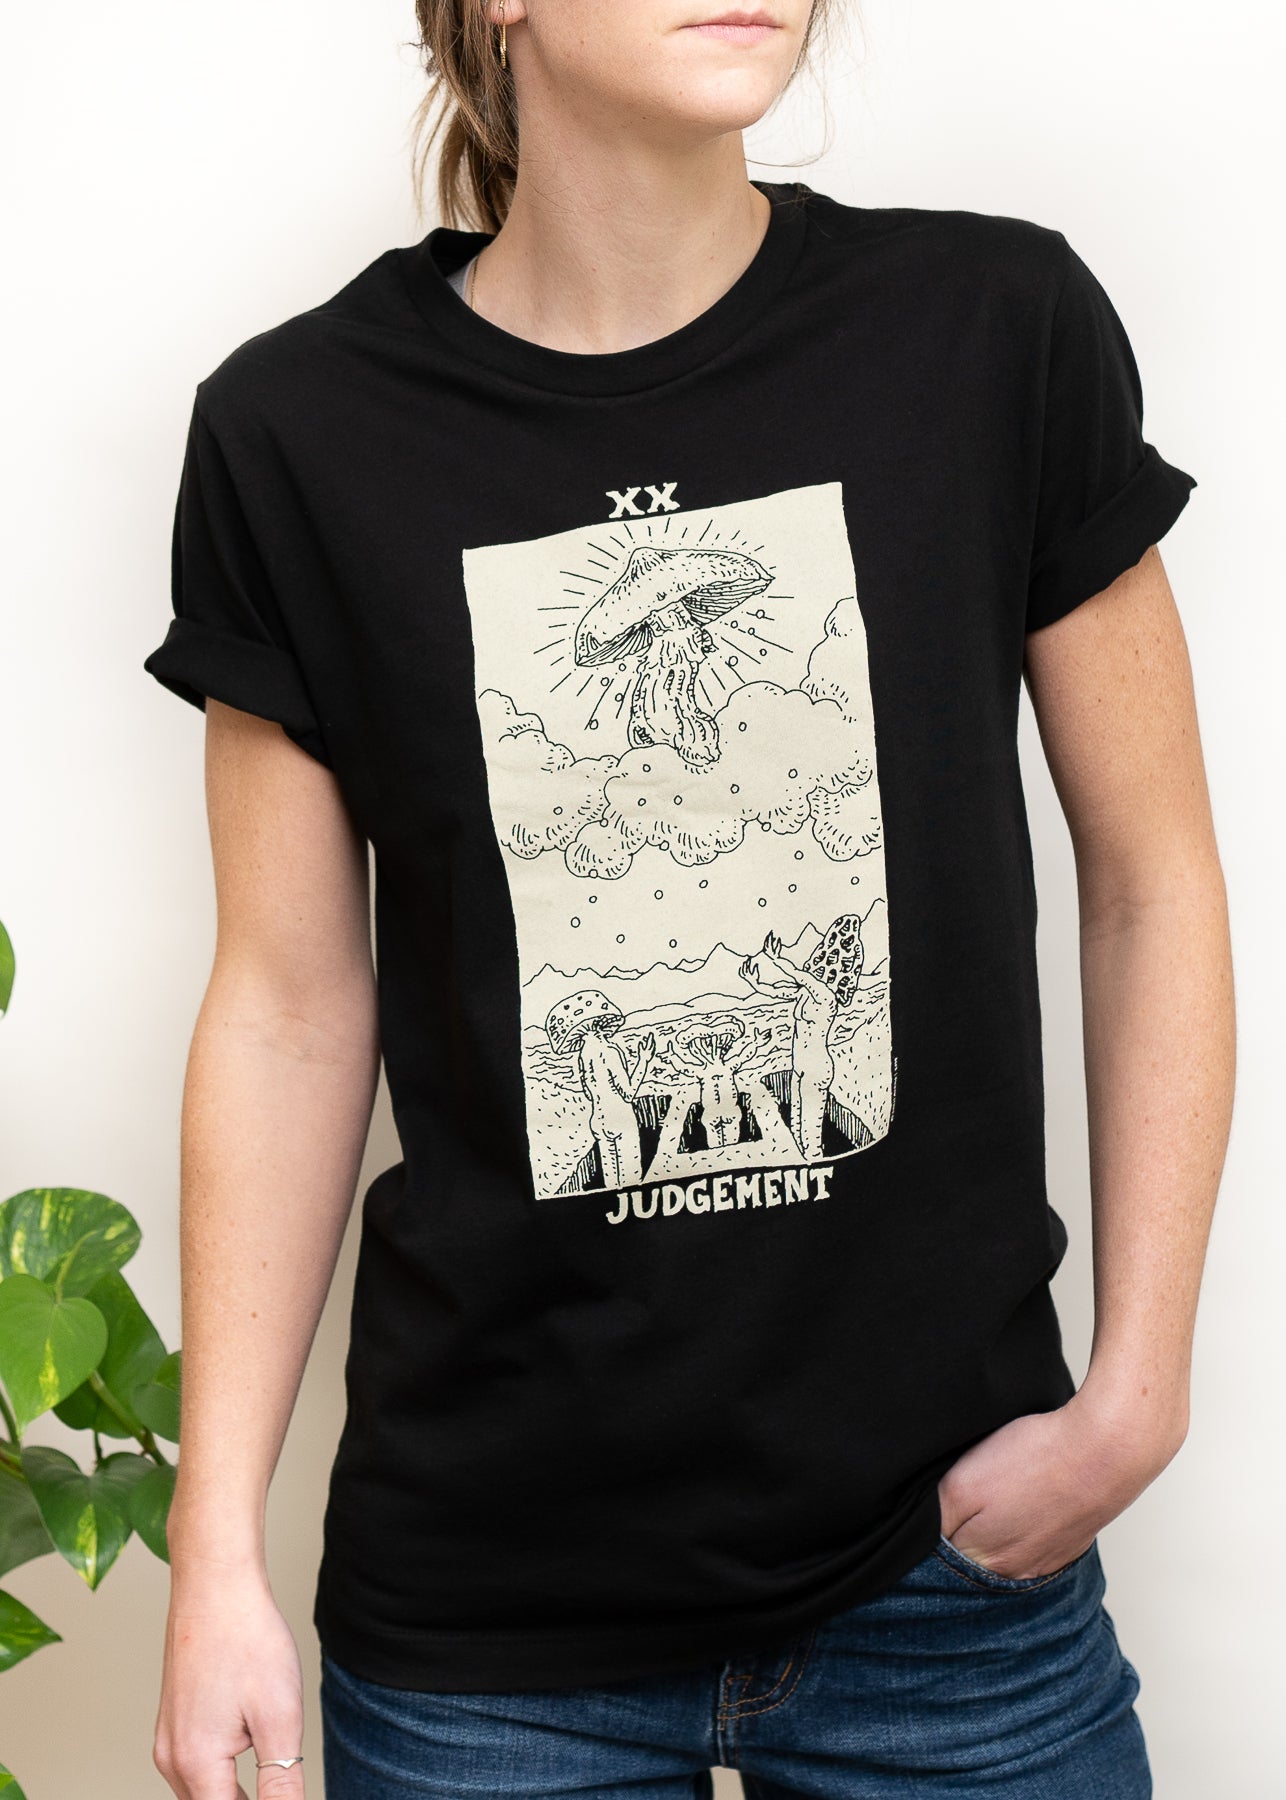 Judgement Mushroom Tarot Shirt, Black Organic Cotton